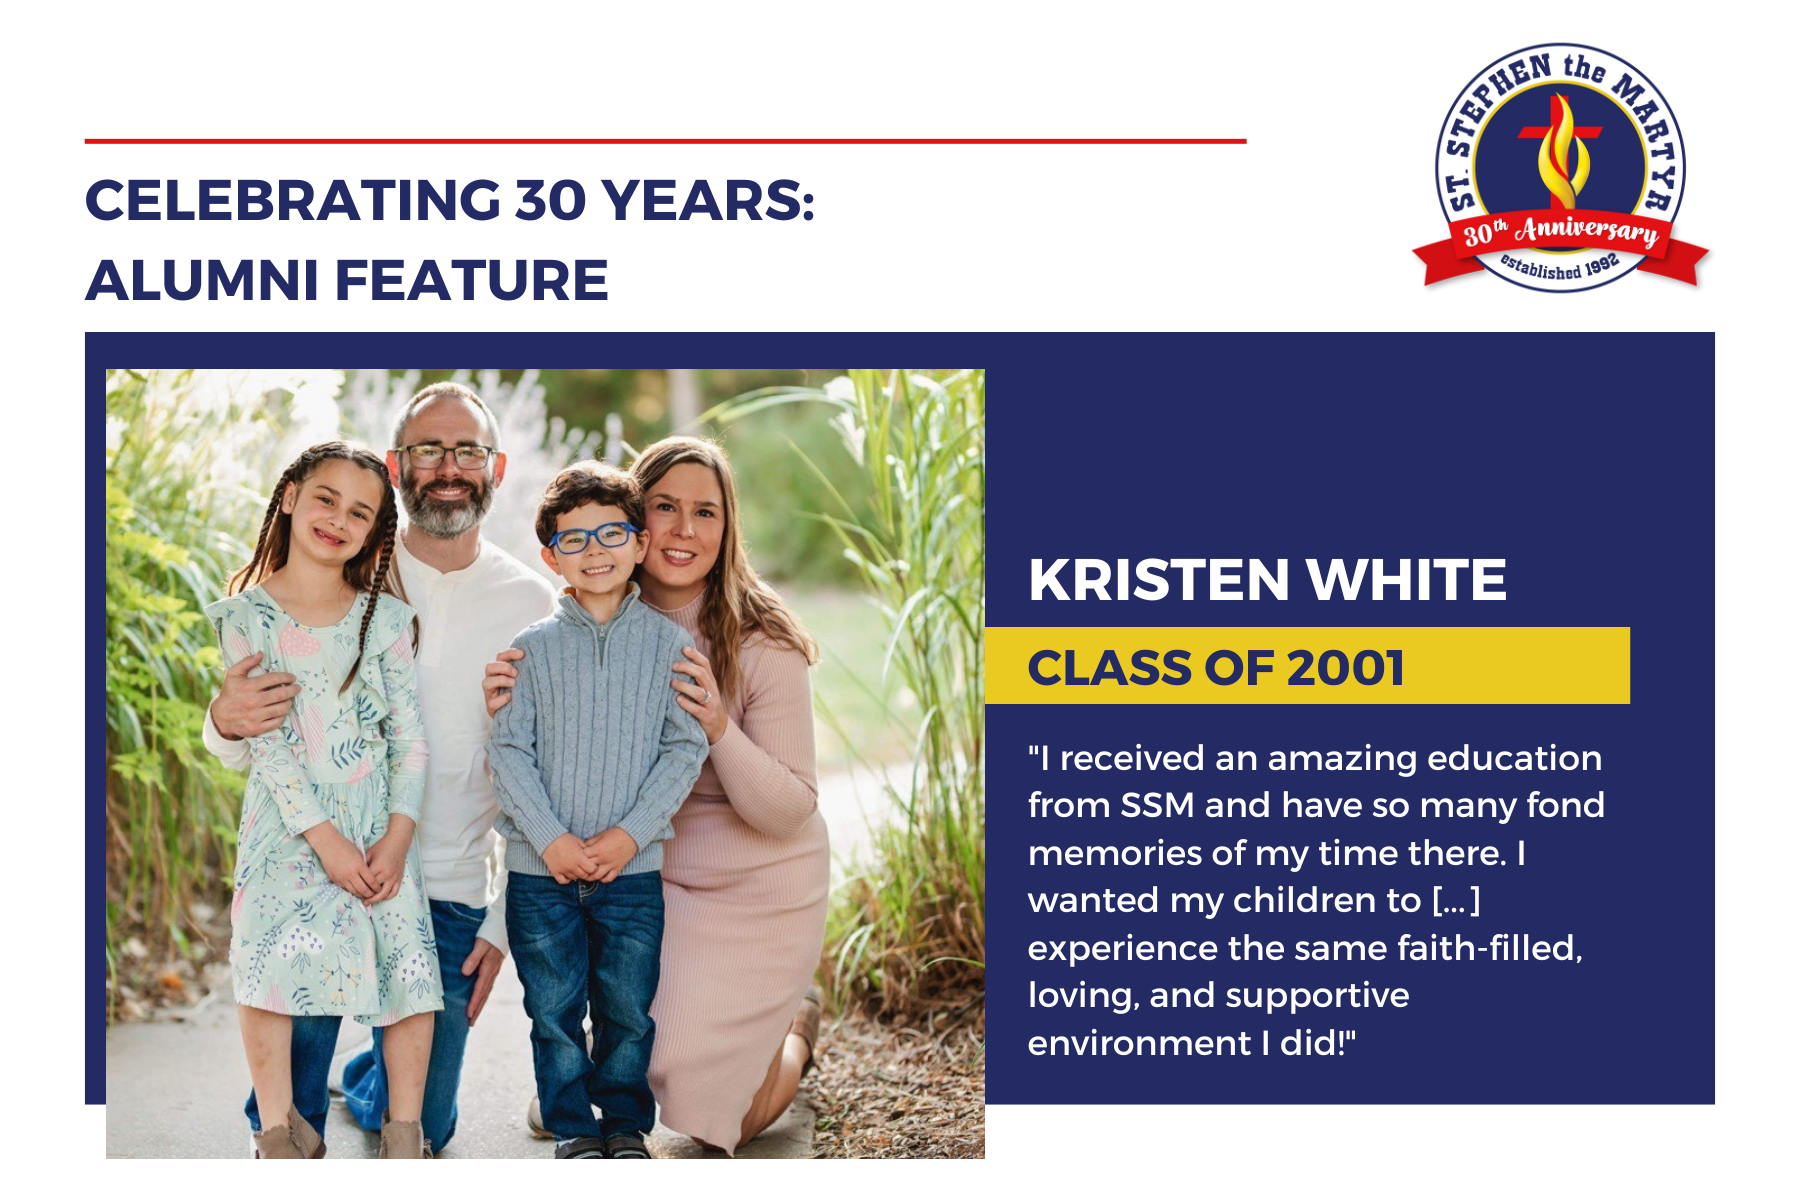 Alumni Feature: Kristen White, Class of 2001